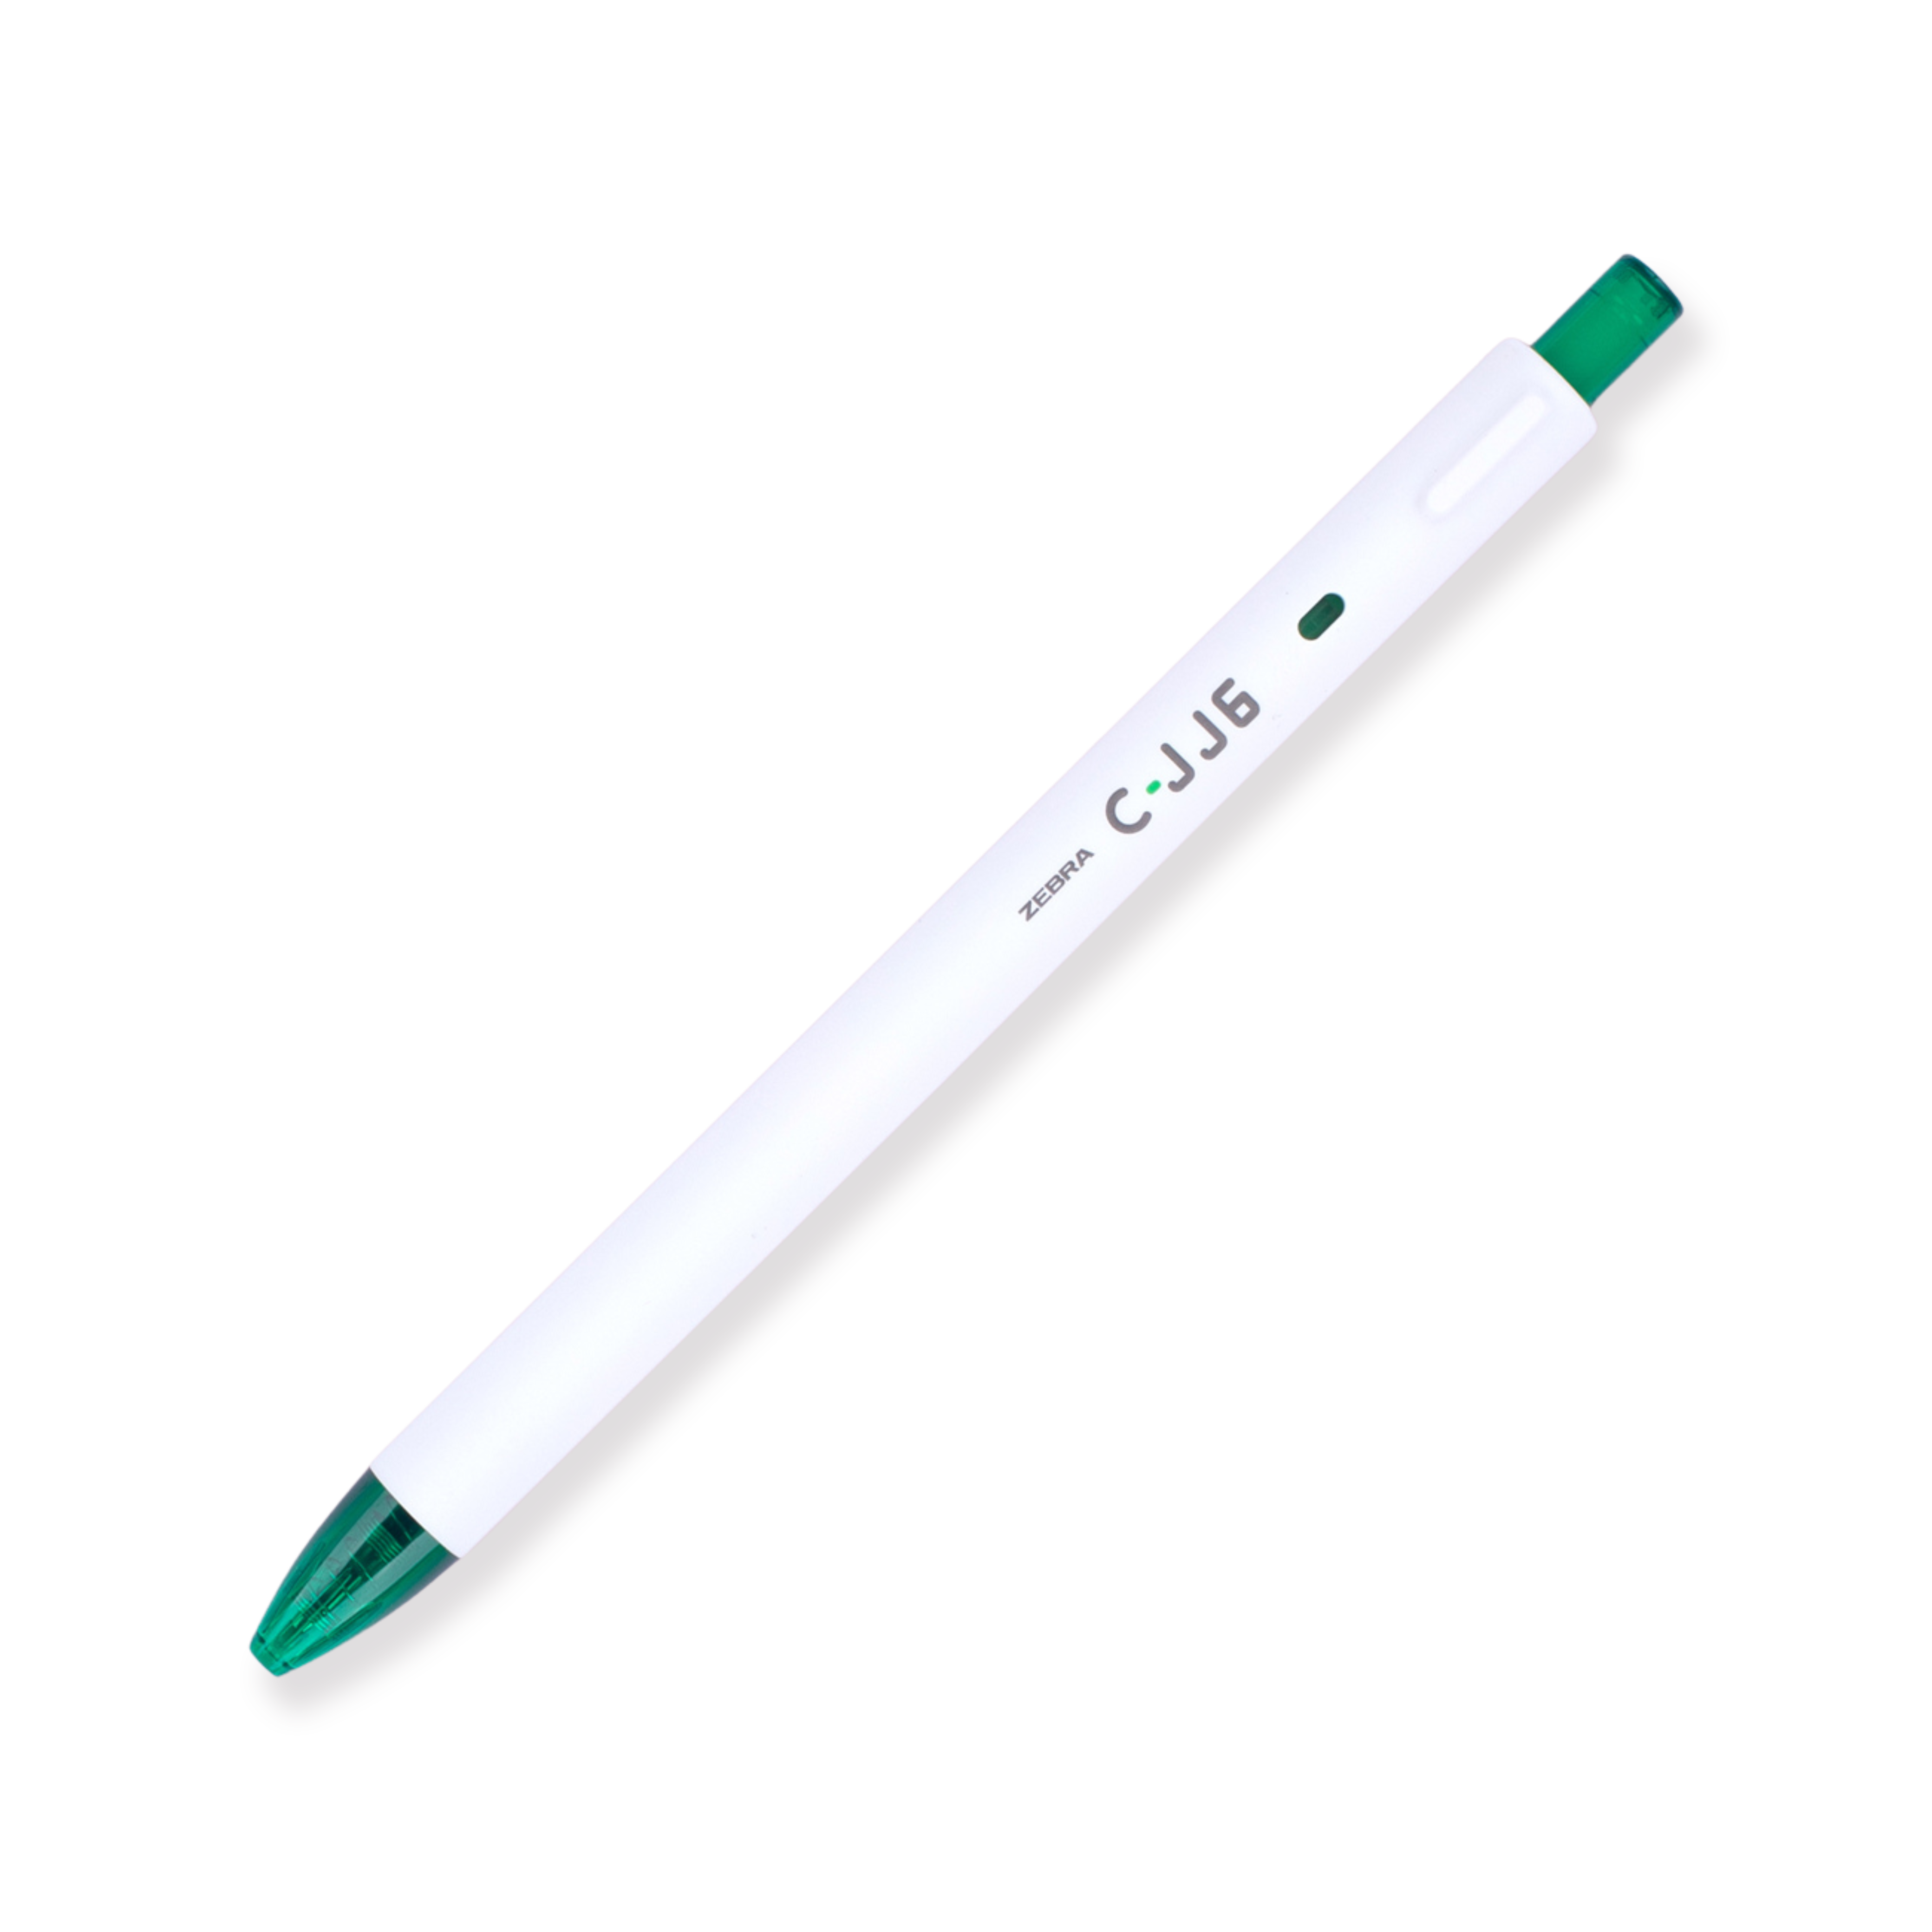 Zebra Rainbow Retractable Gel Pen 0.5mm - Green - Stationery Pal